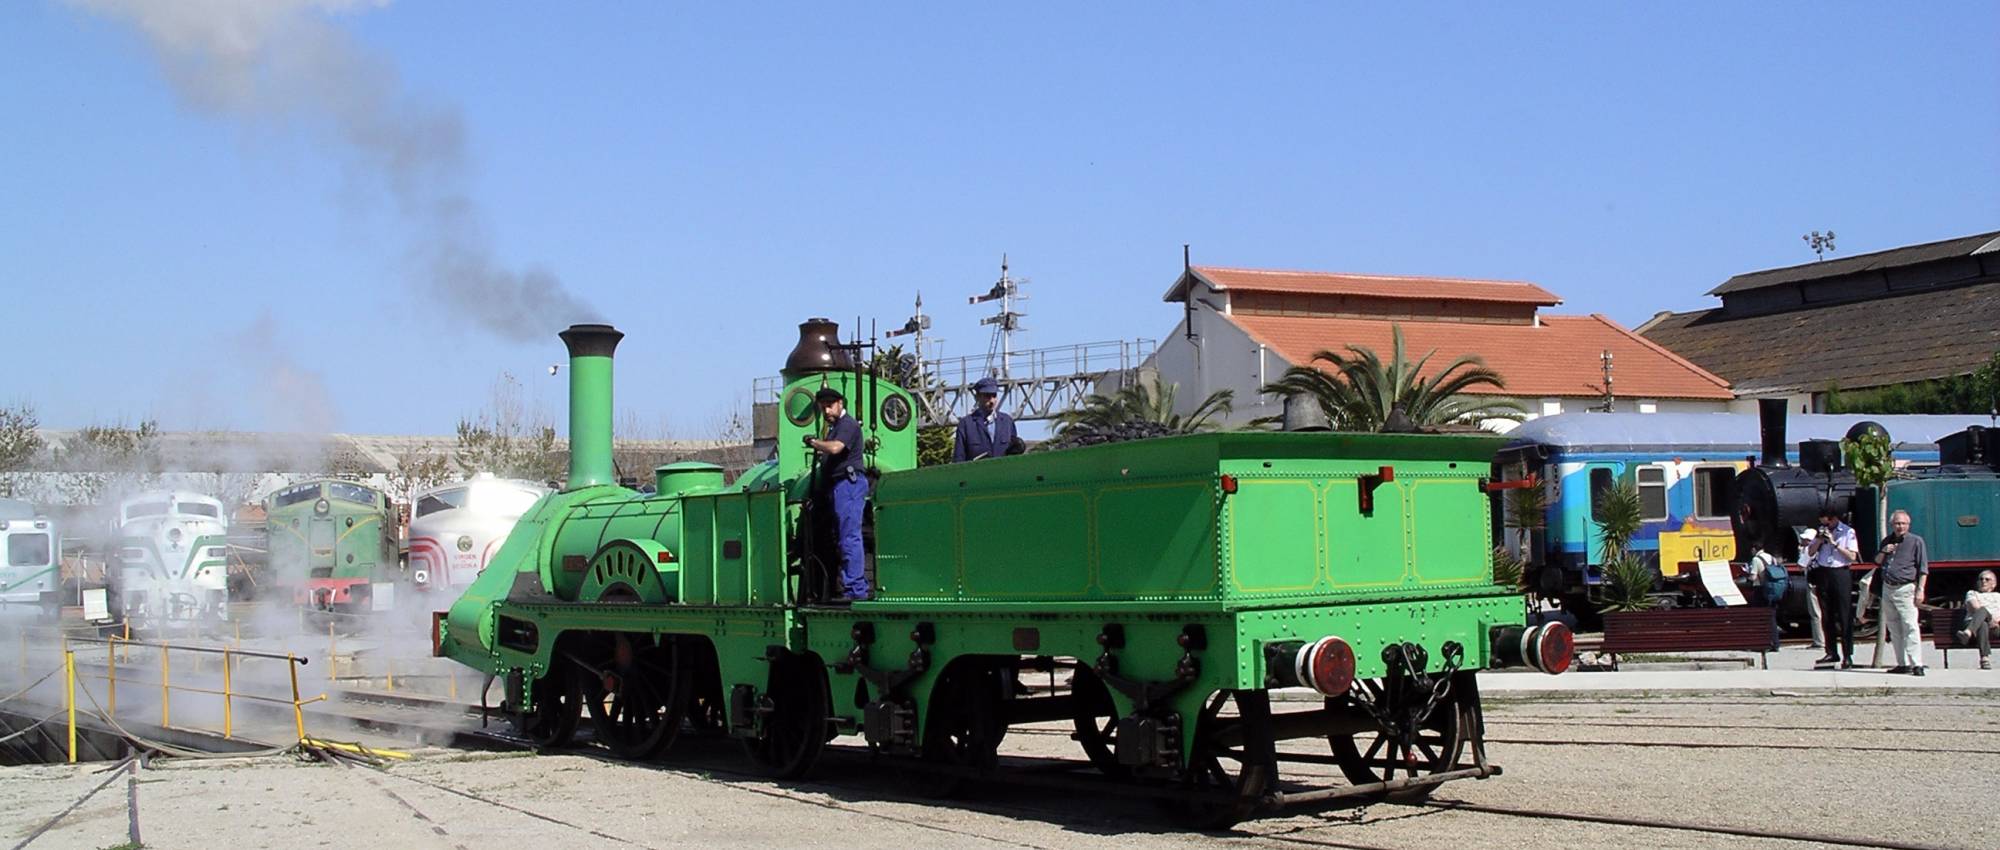 Tren del Centenario 1848-1948 del Museo del Ferrocarril de Vilanova i la Geltrú. Nils Öberg / Wikimedia Commons. CC BY-SA 3.0